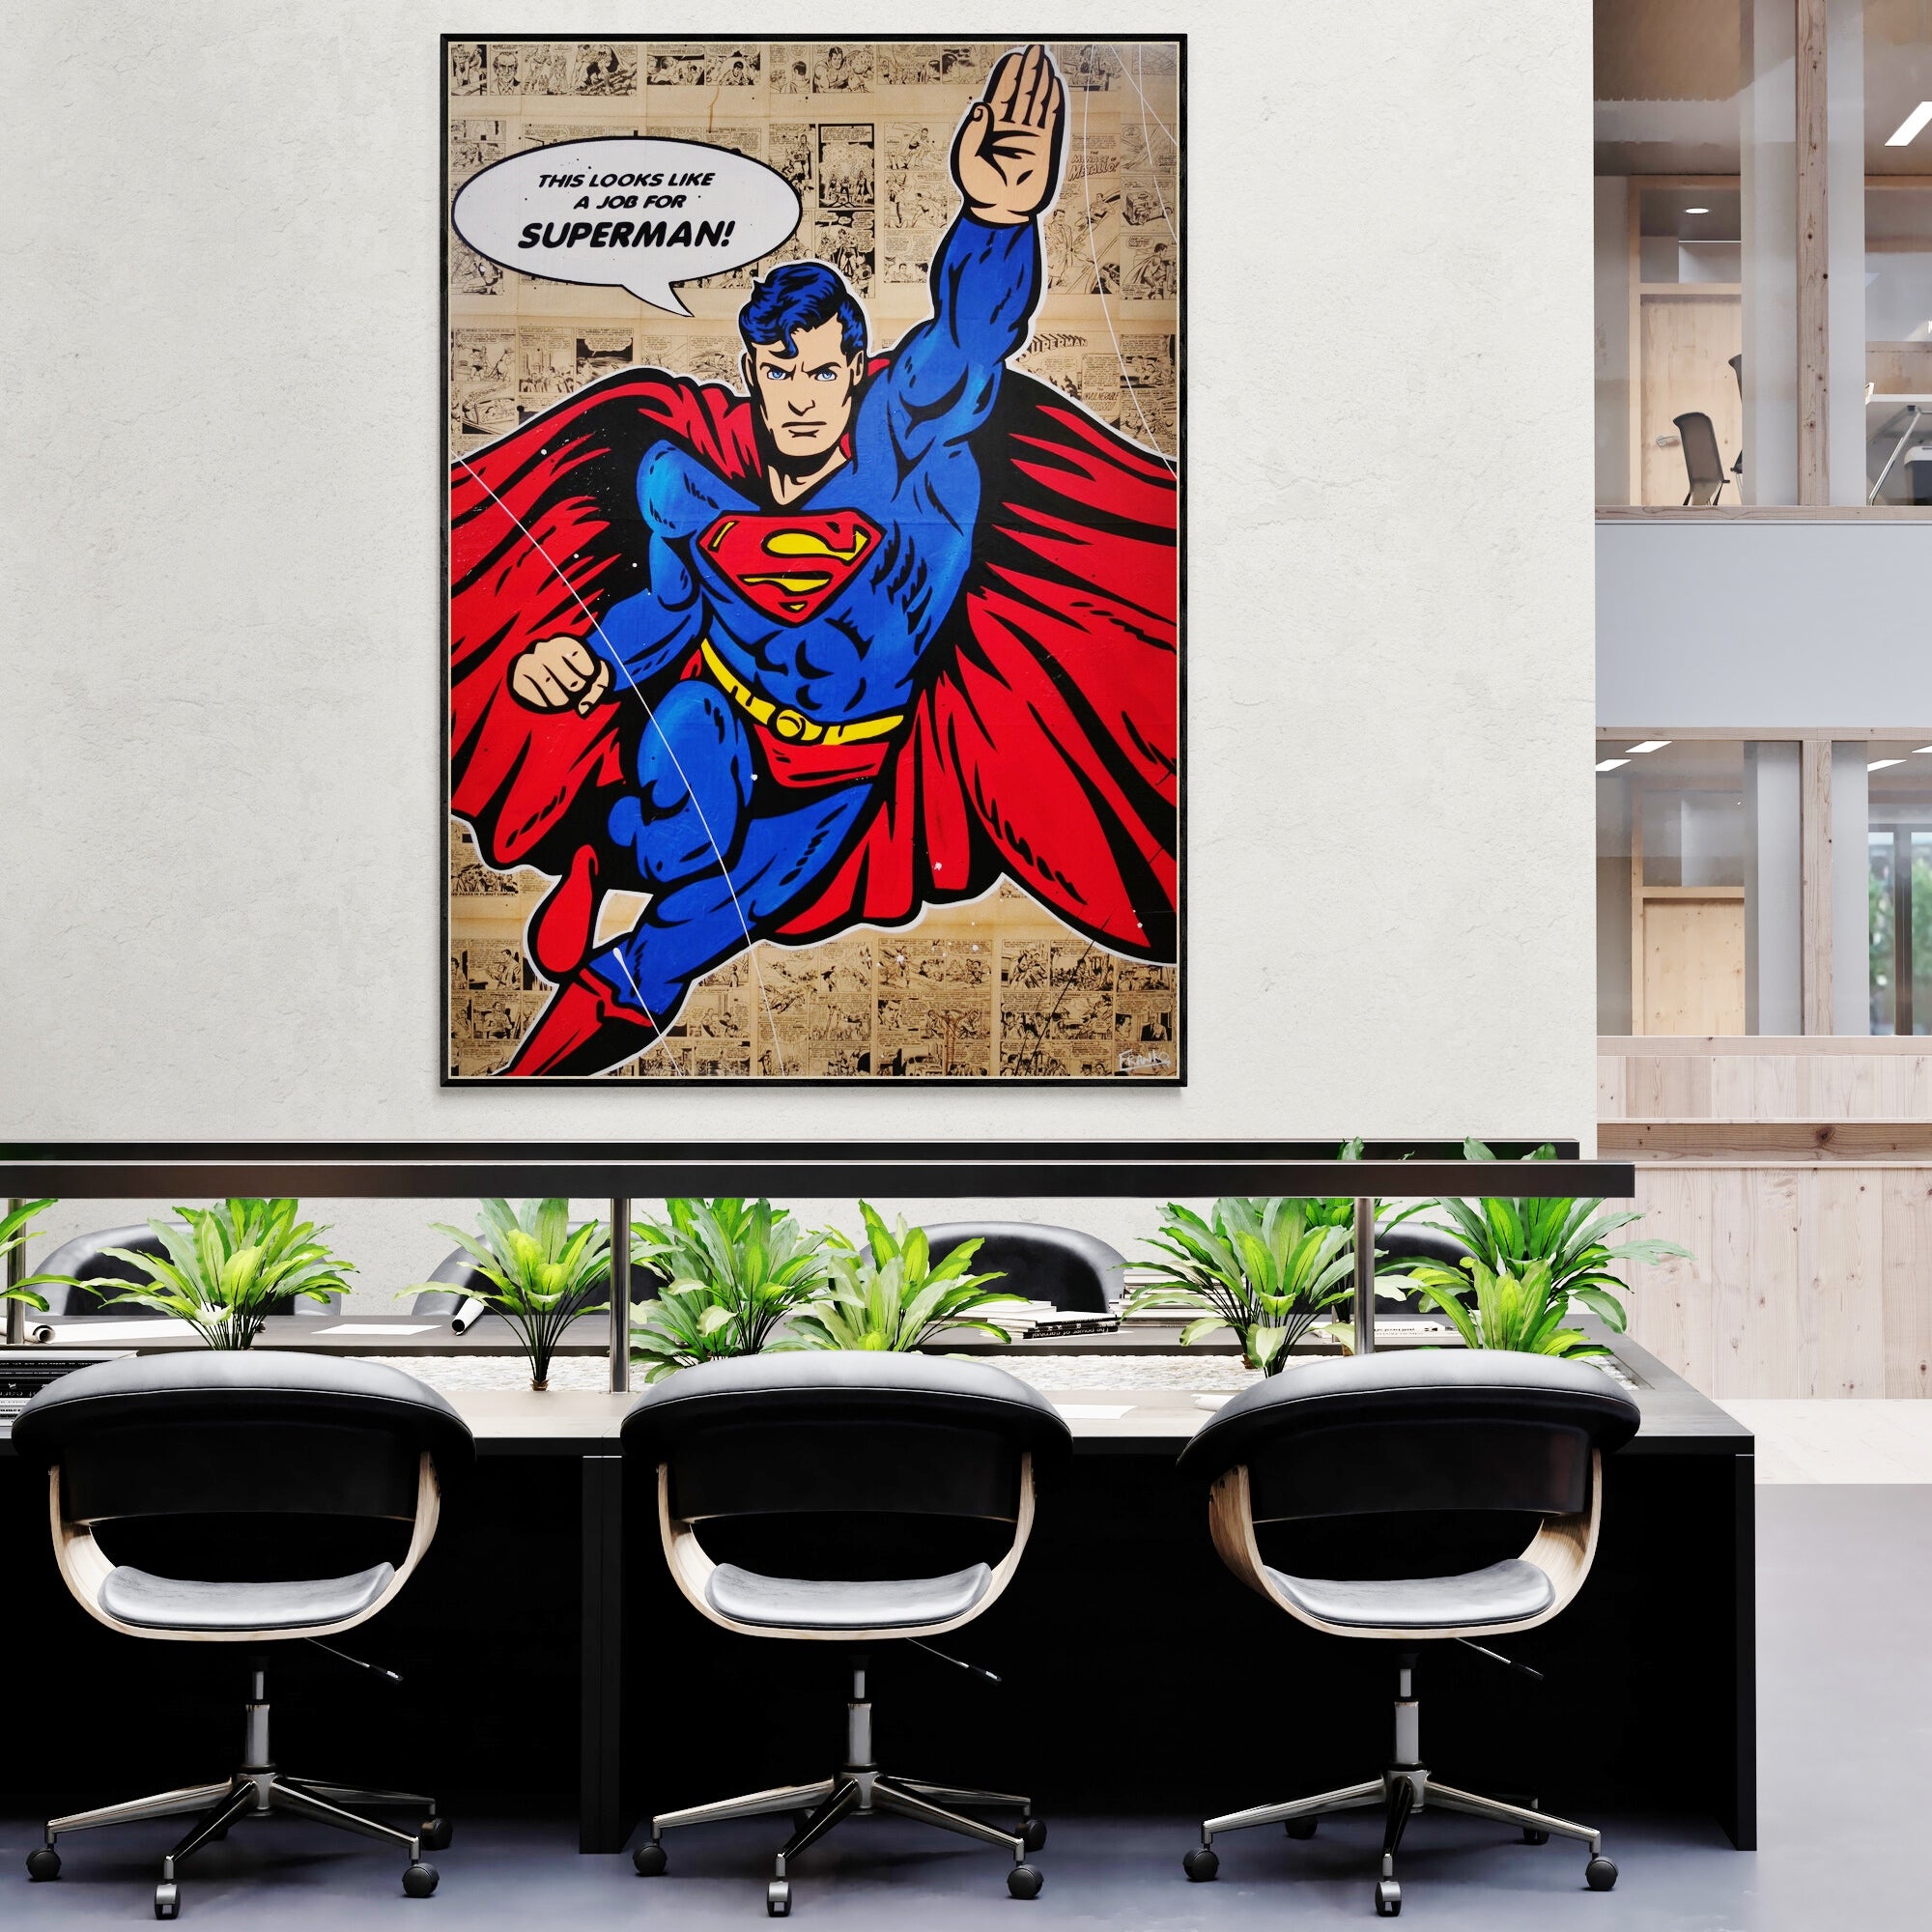 Super Job 140cm x 100cm Superman Urban Pop Art Book Club Painting (SOLD)